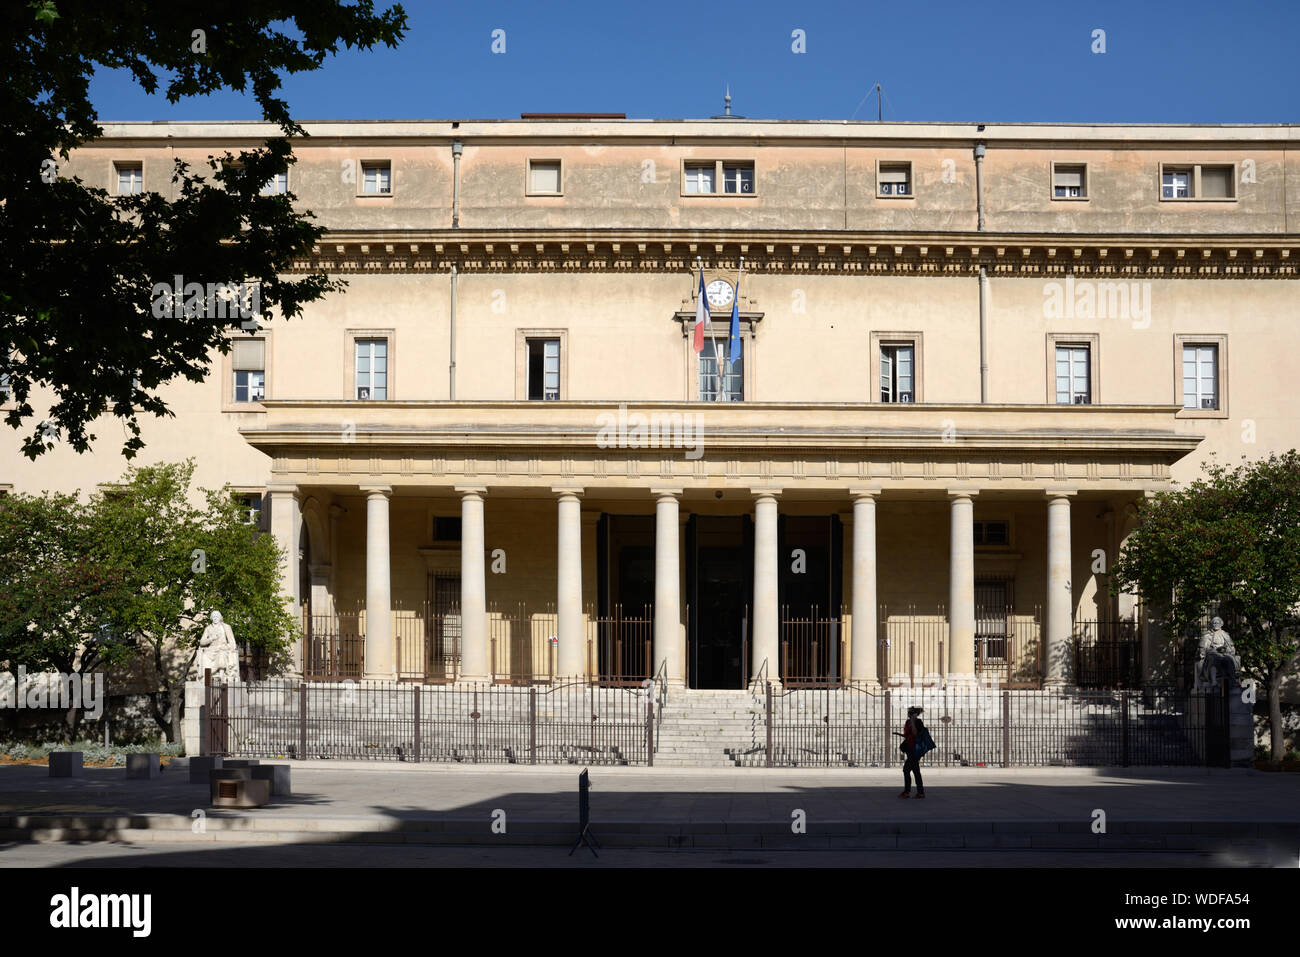 Neoklassizistische Fassade des Palais de Justice oder Palast der Justiz (1787-1832), von Claude-Nicolas Ledoux, Gerichte Aix-en-Provence Frankreich Stockfoto